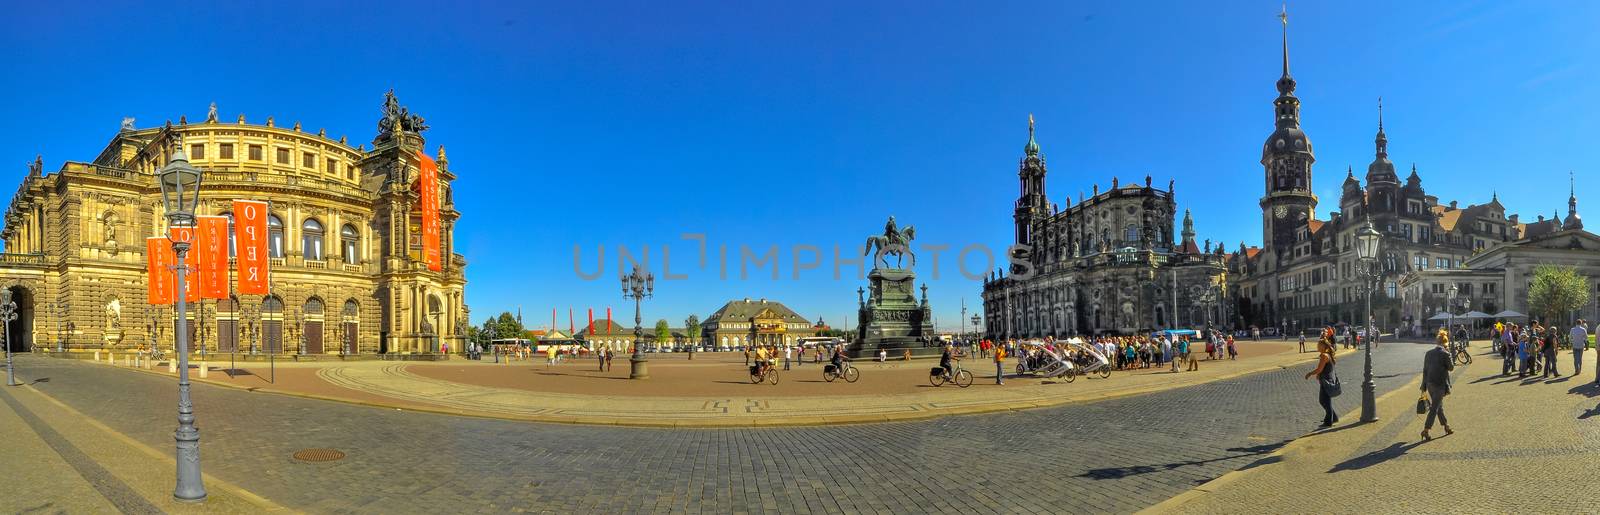 Semper Opera Panorama in Dresden by weltreisendertj